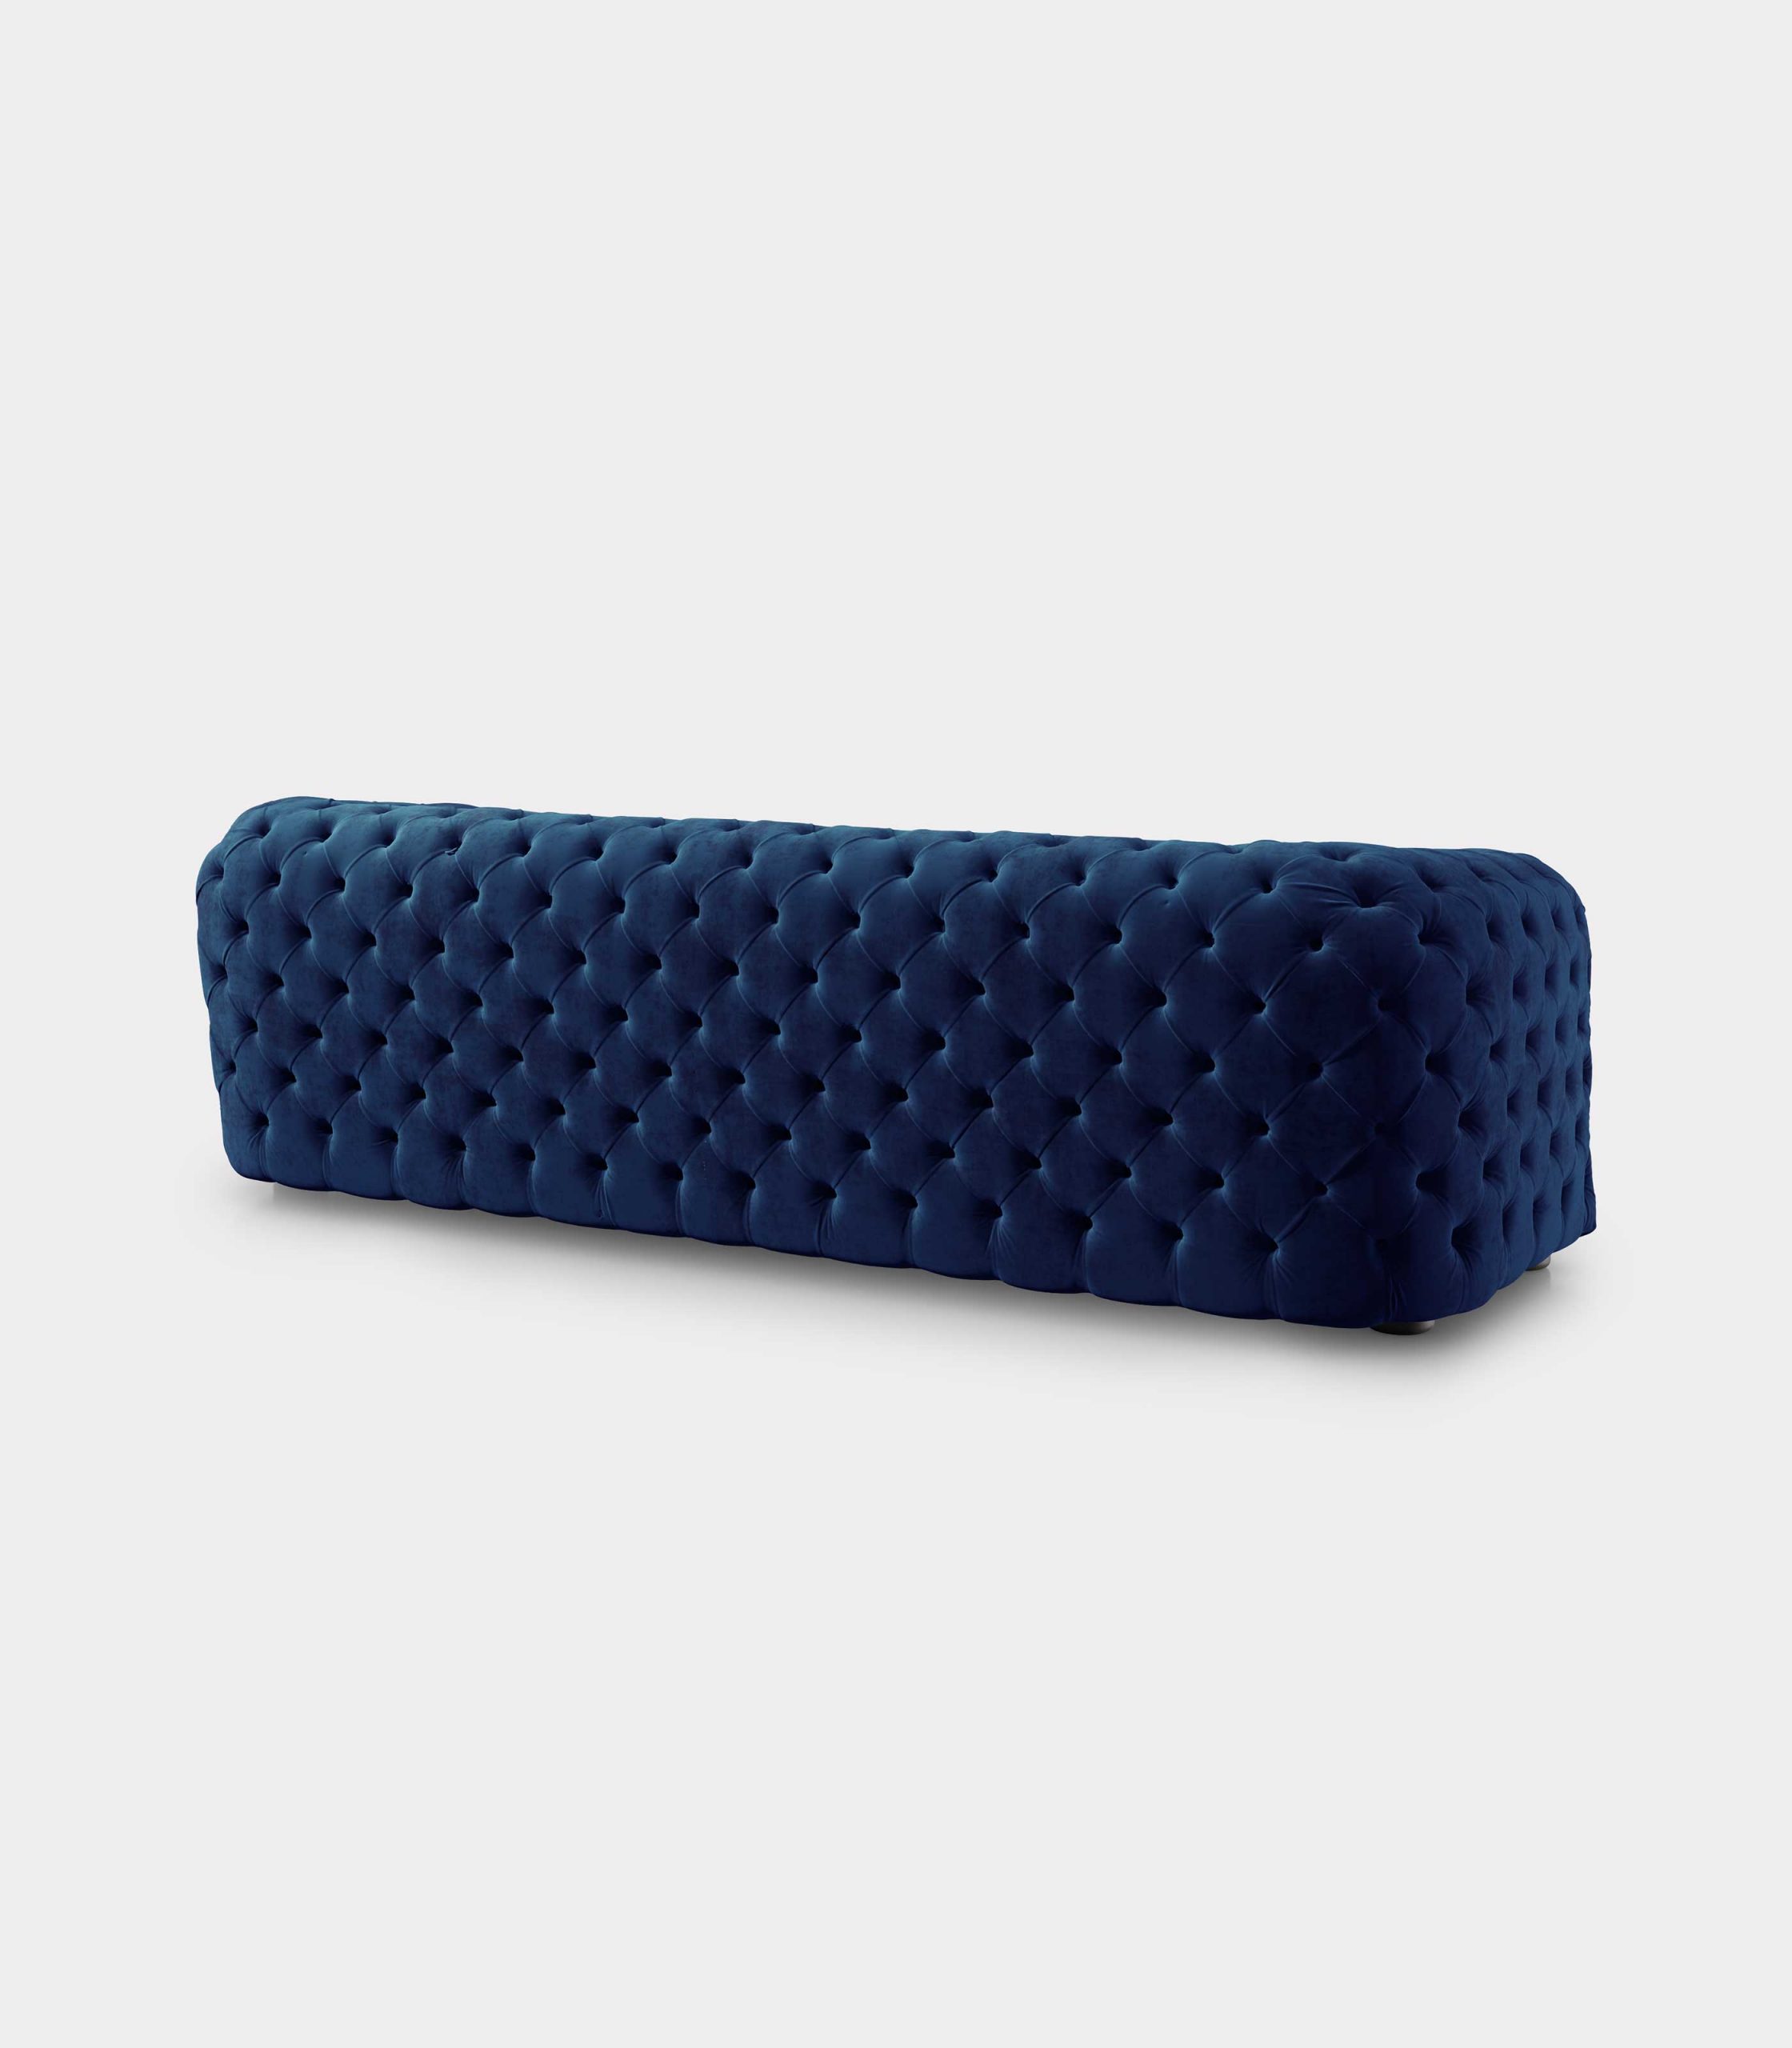 Capitonné blue velvet sofa loopo milan design D